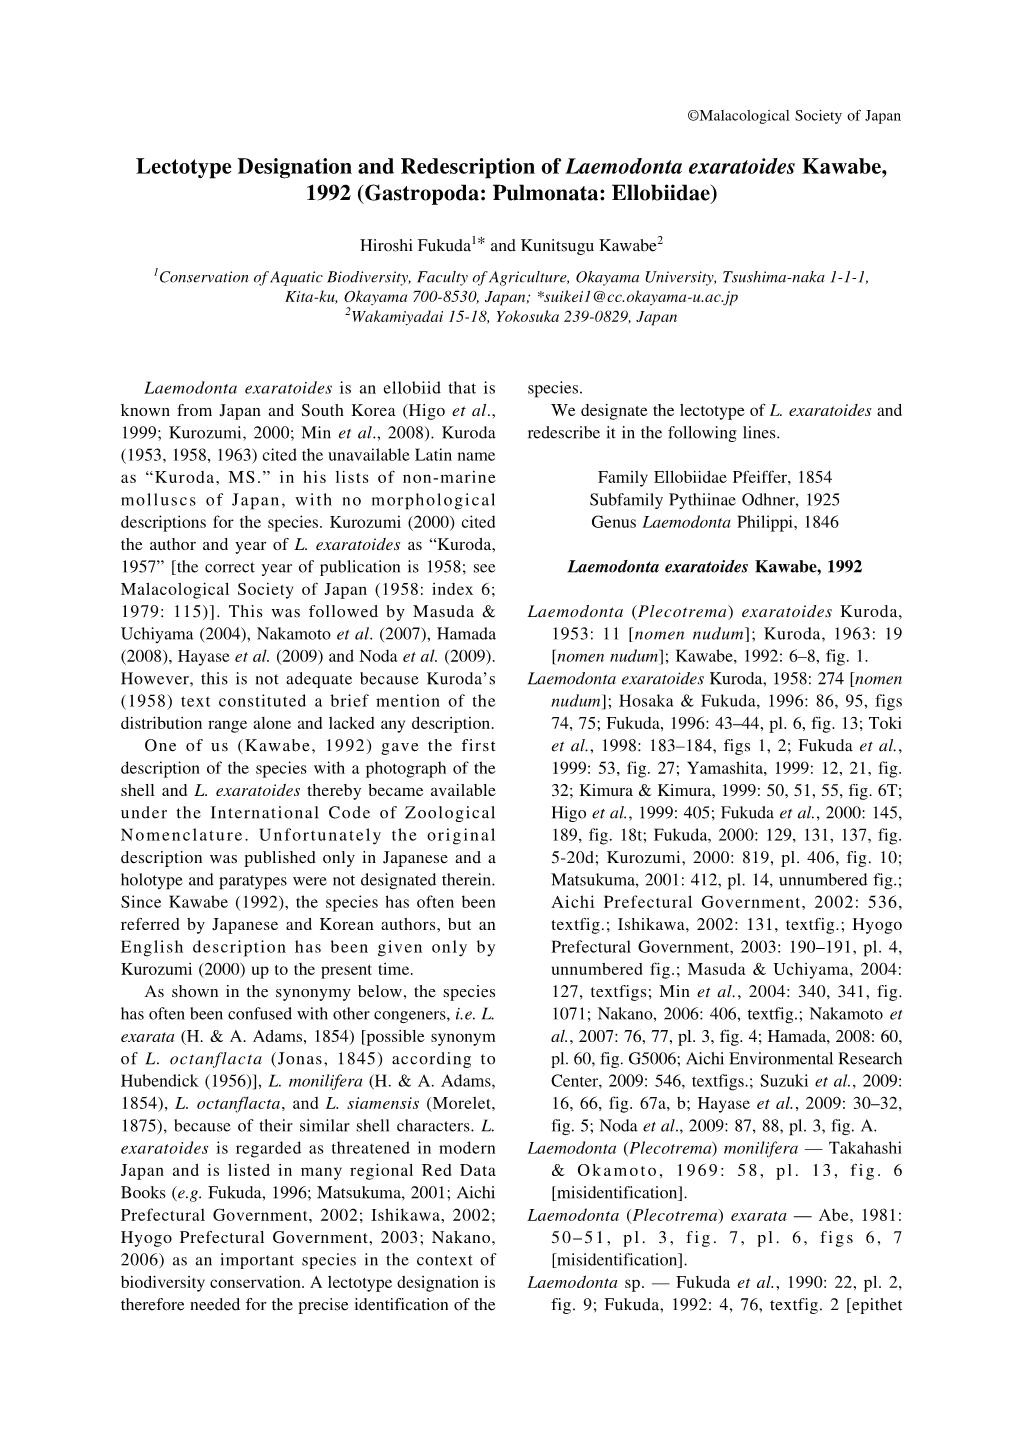 Lectotype Designation and Redescription of Laemodonta Exaratoides Kawabe, 1992 (Gastropoda: Pulmonata: Ellobiidae)